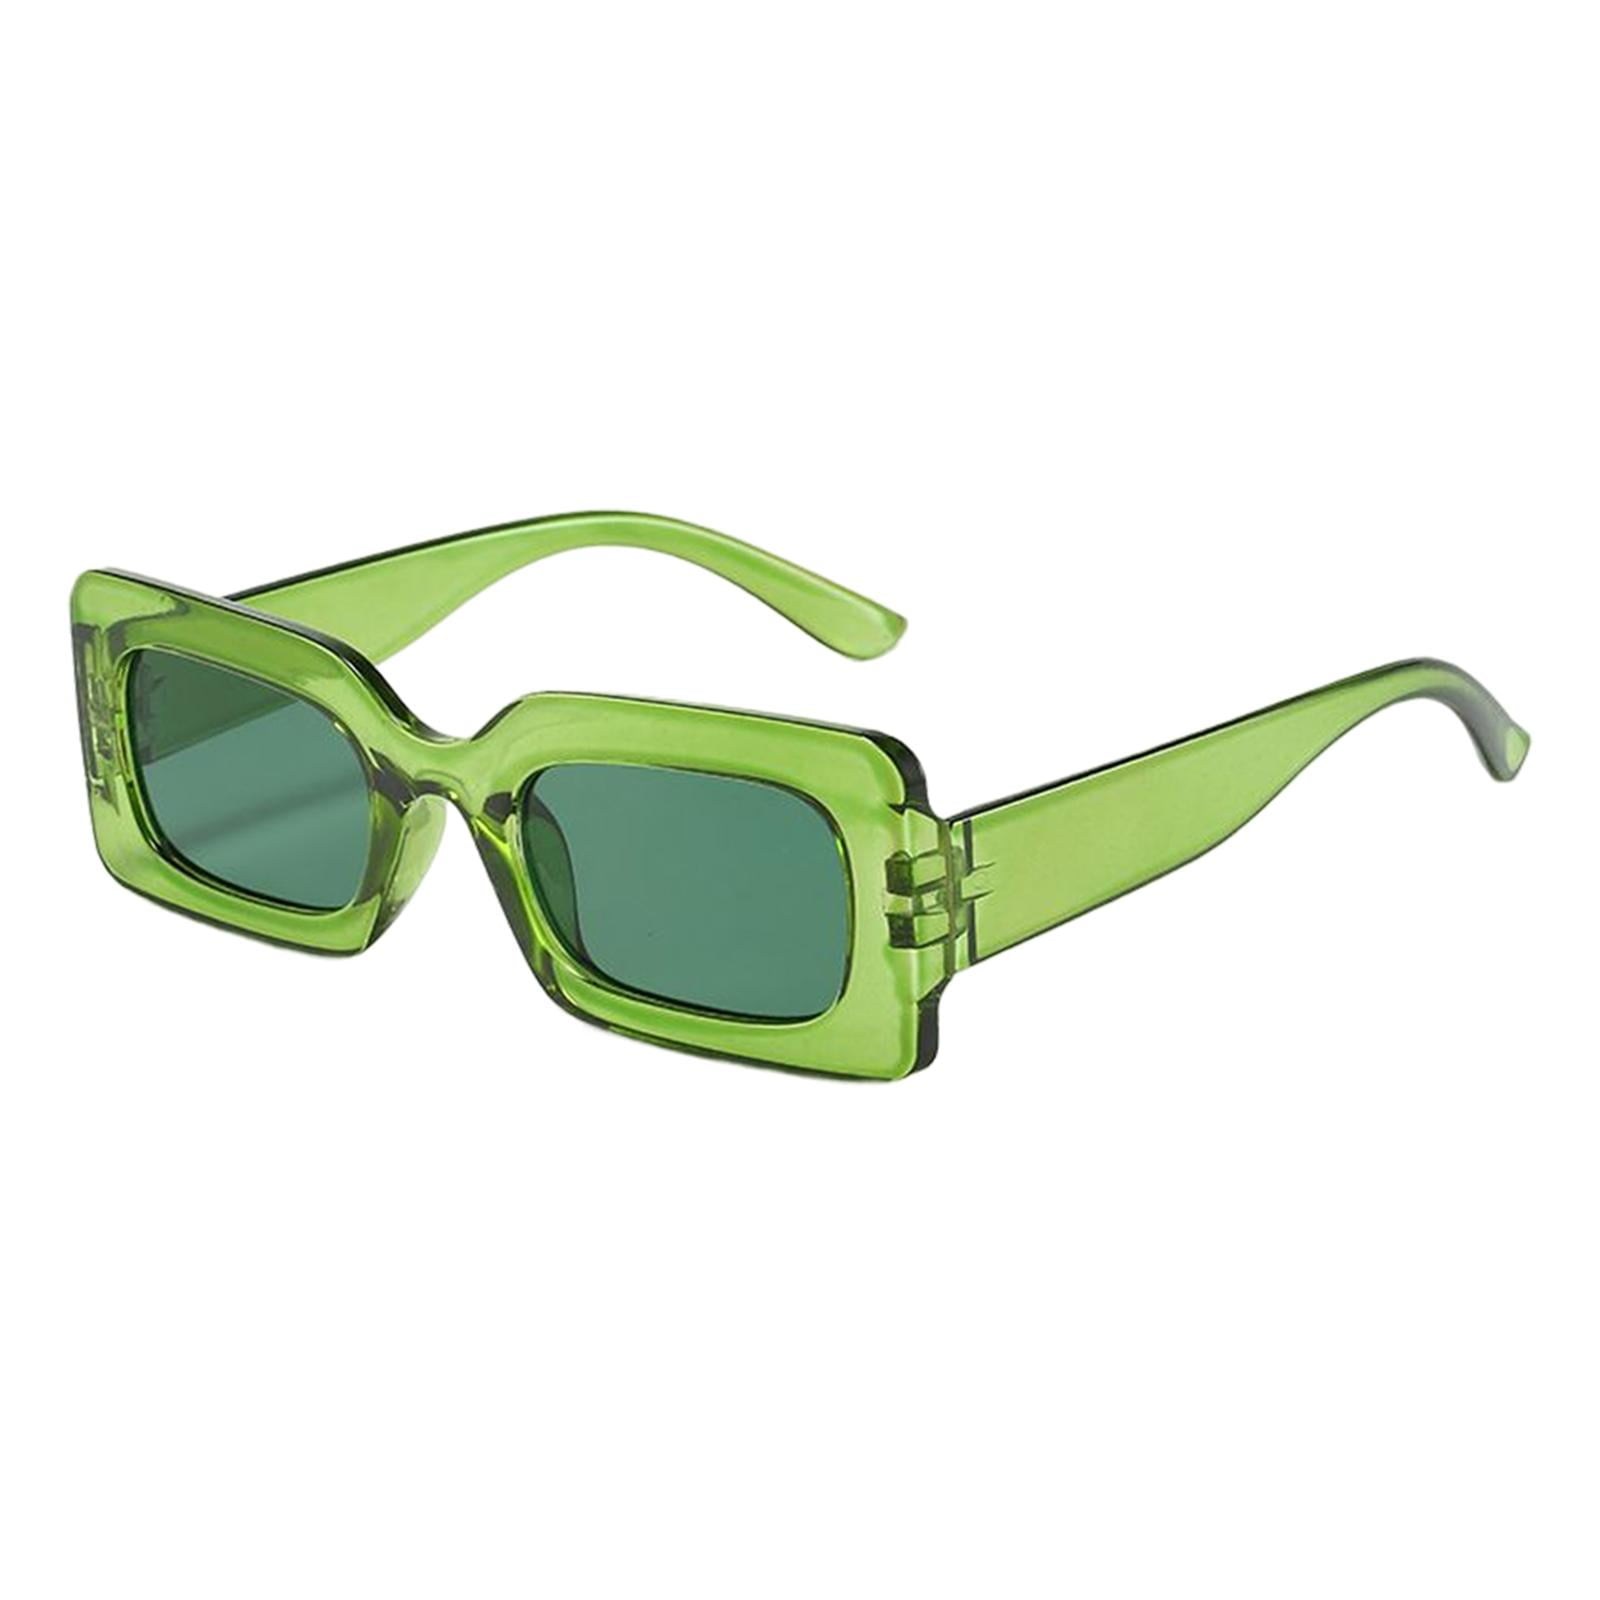 Retro Sunglasses Vintage,Fashion Driving Glasses,Small Square